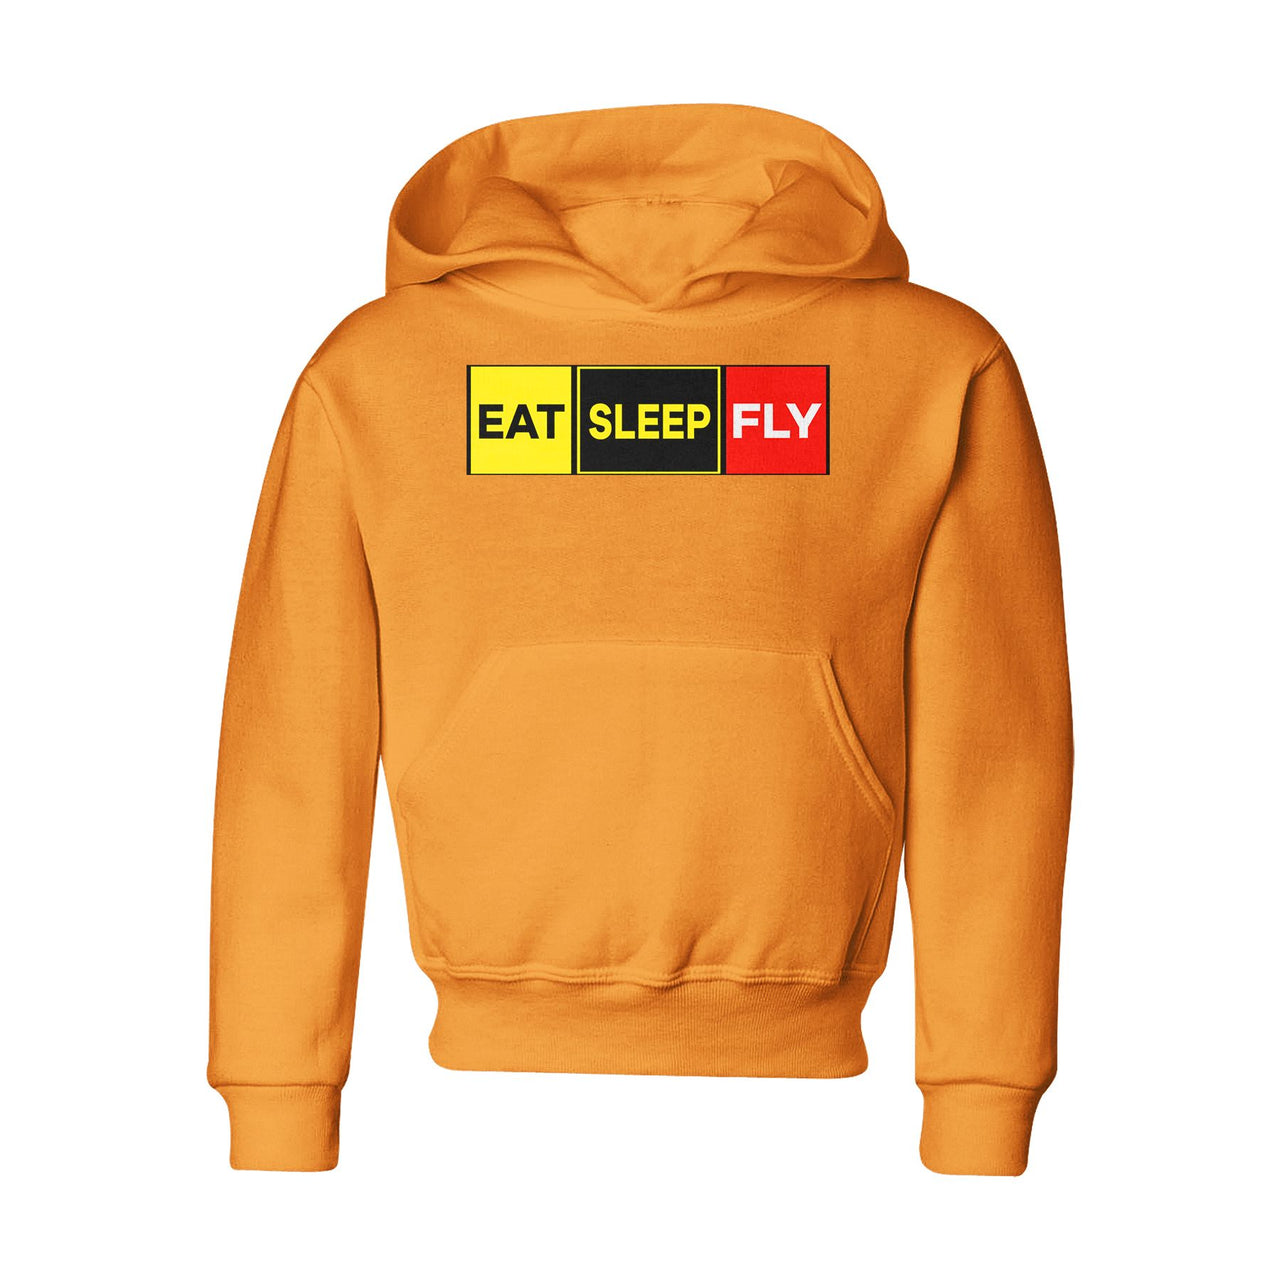 Eat Sleep Fly (Colourful) Designed "CHILDREN" Hoodies